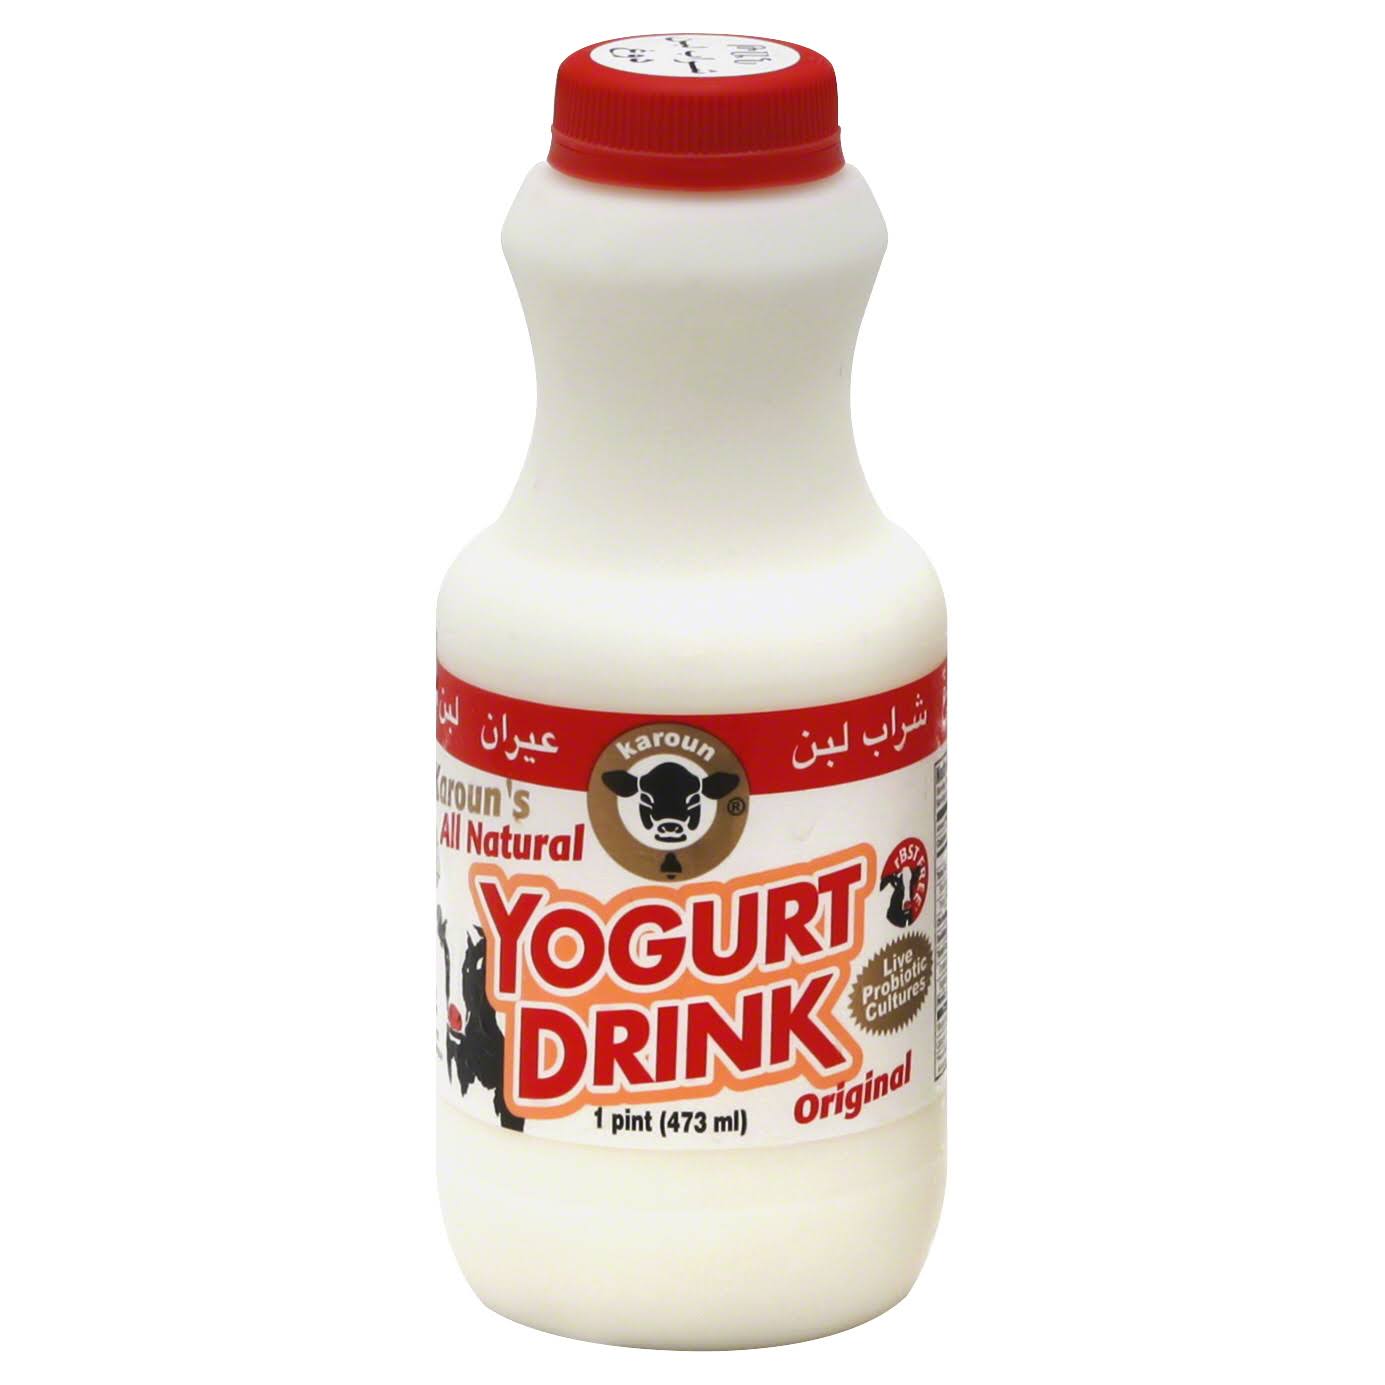 Karoun Yogurt Drink, Original - 1 pt